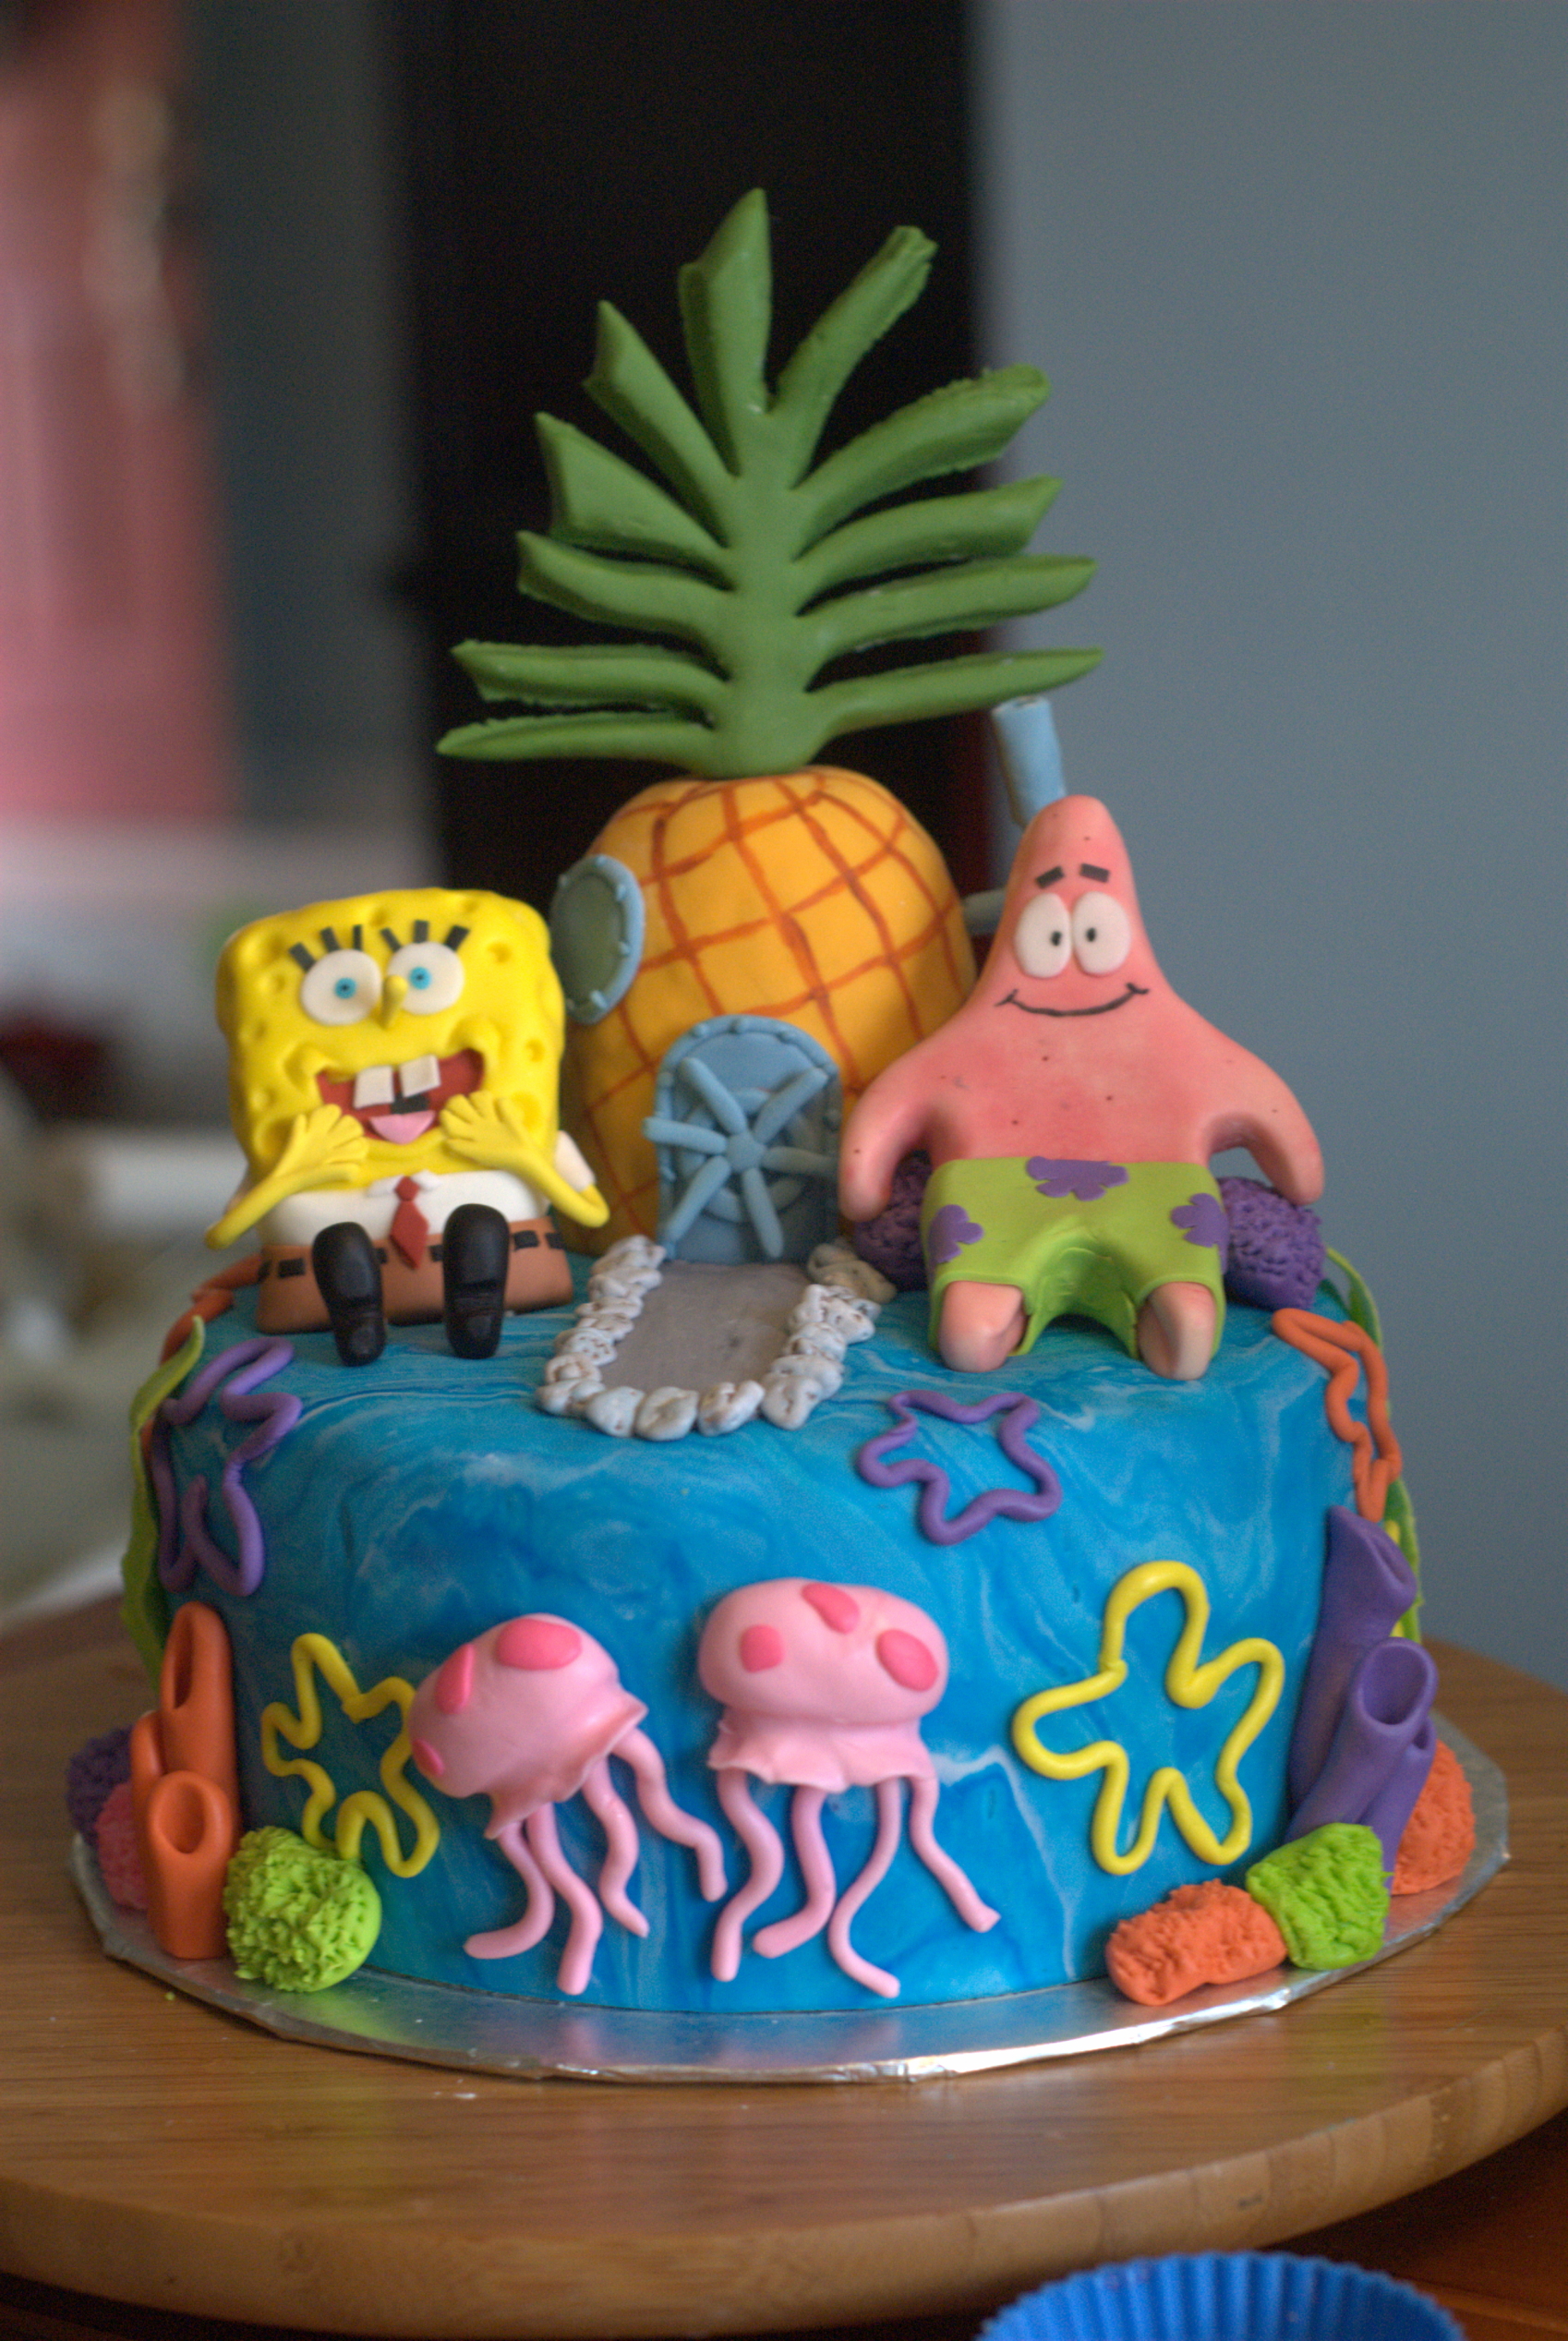 Spongebob Squarepants Cake.